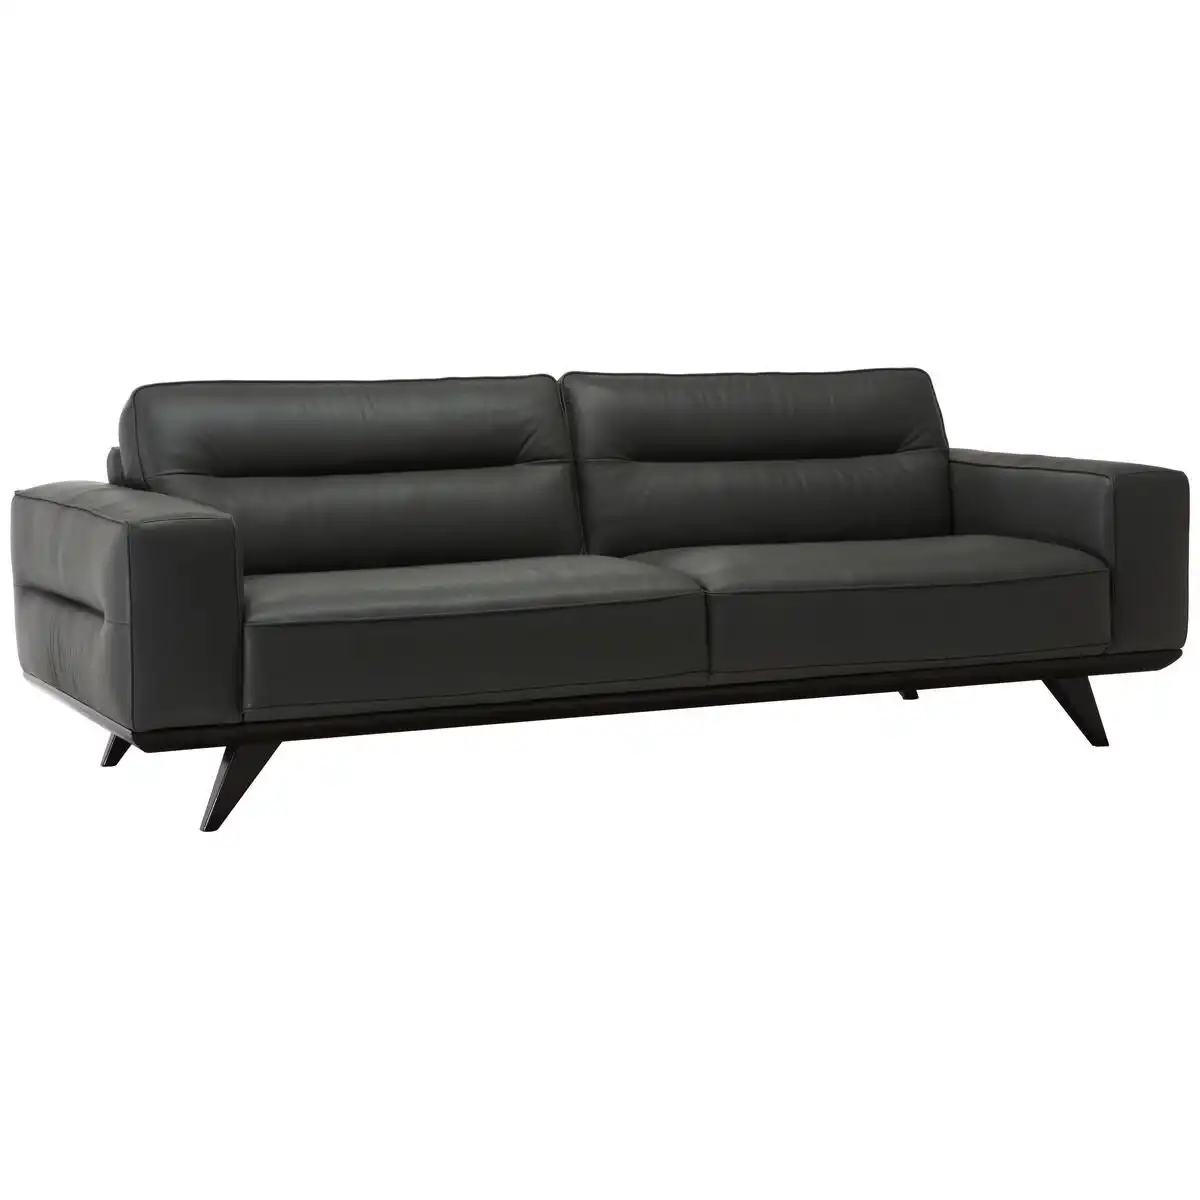 Natuzzi Editions Adrenalina Black Leather Sofa 3 Seater